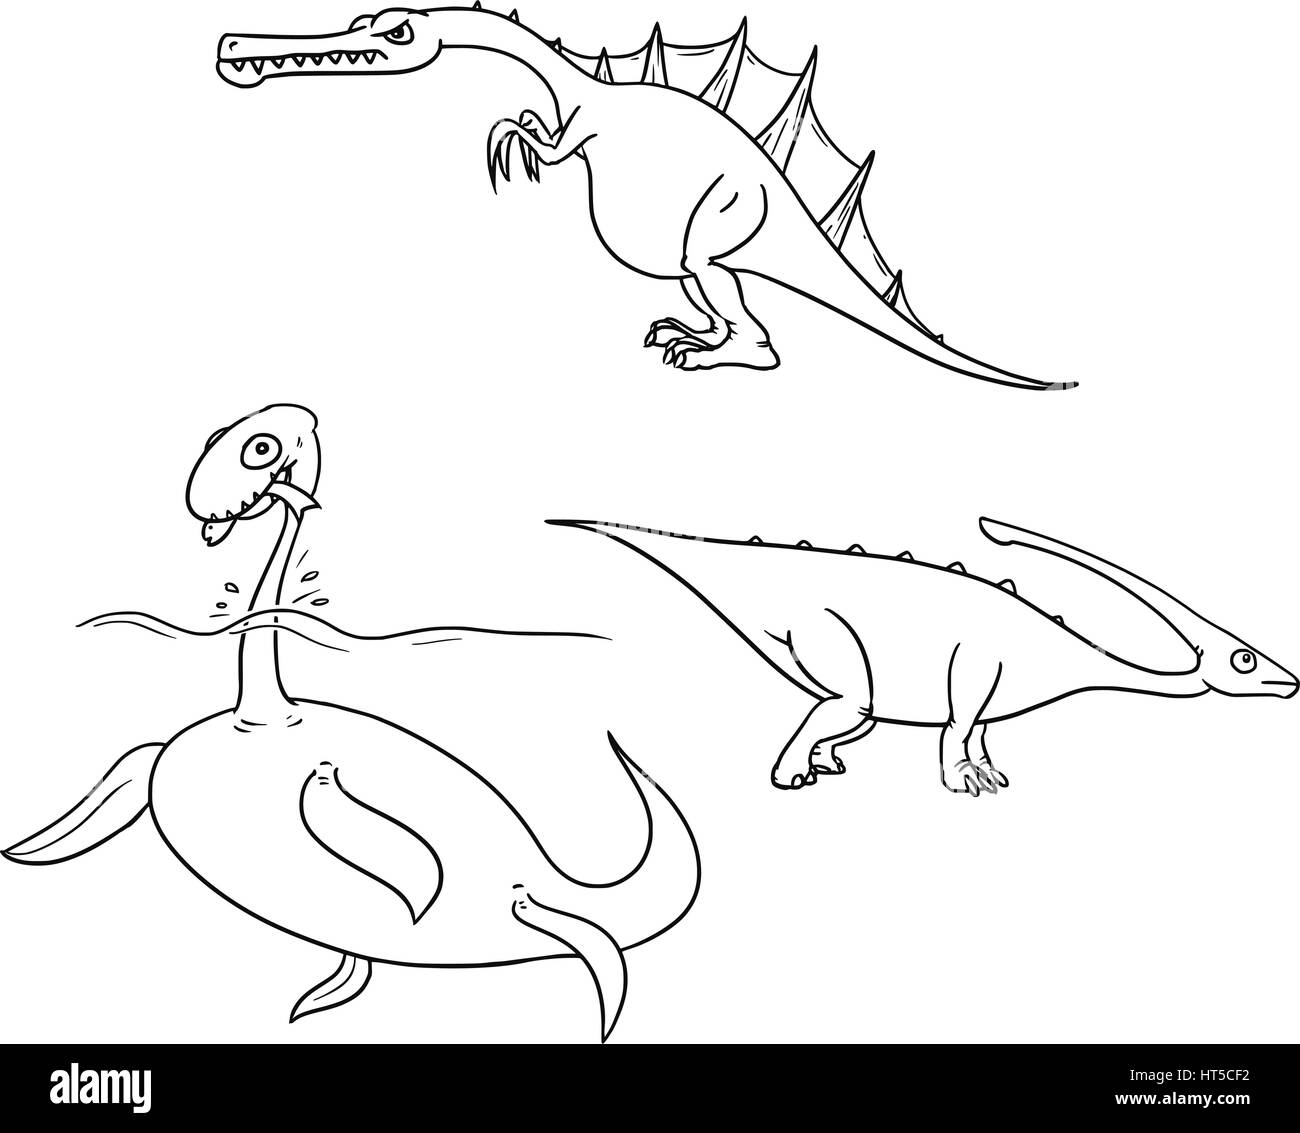 Cartoon Vector Set 02 de l'ancien monster dinosaure - Les plésiosaures,Charonosaurus/Parasaurolophus Spinosaurus, Illustration de Vecteur